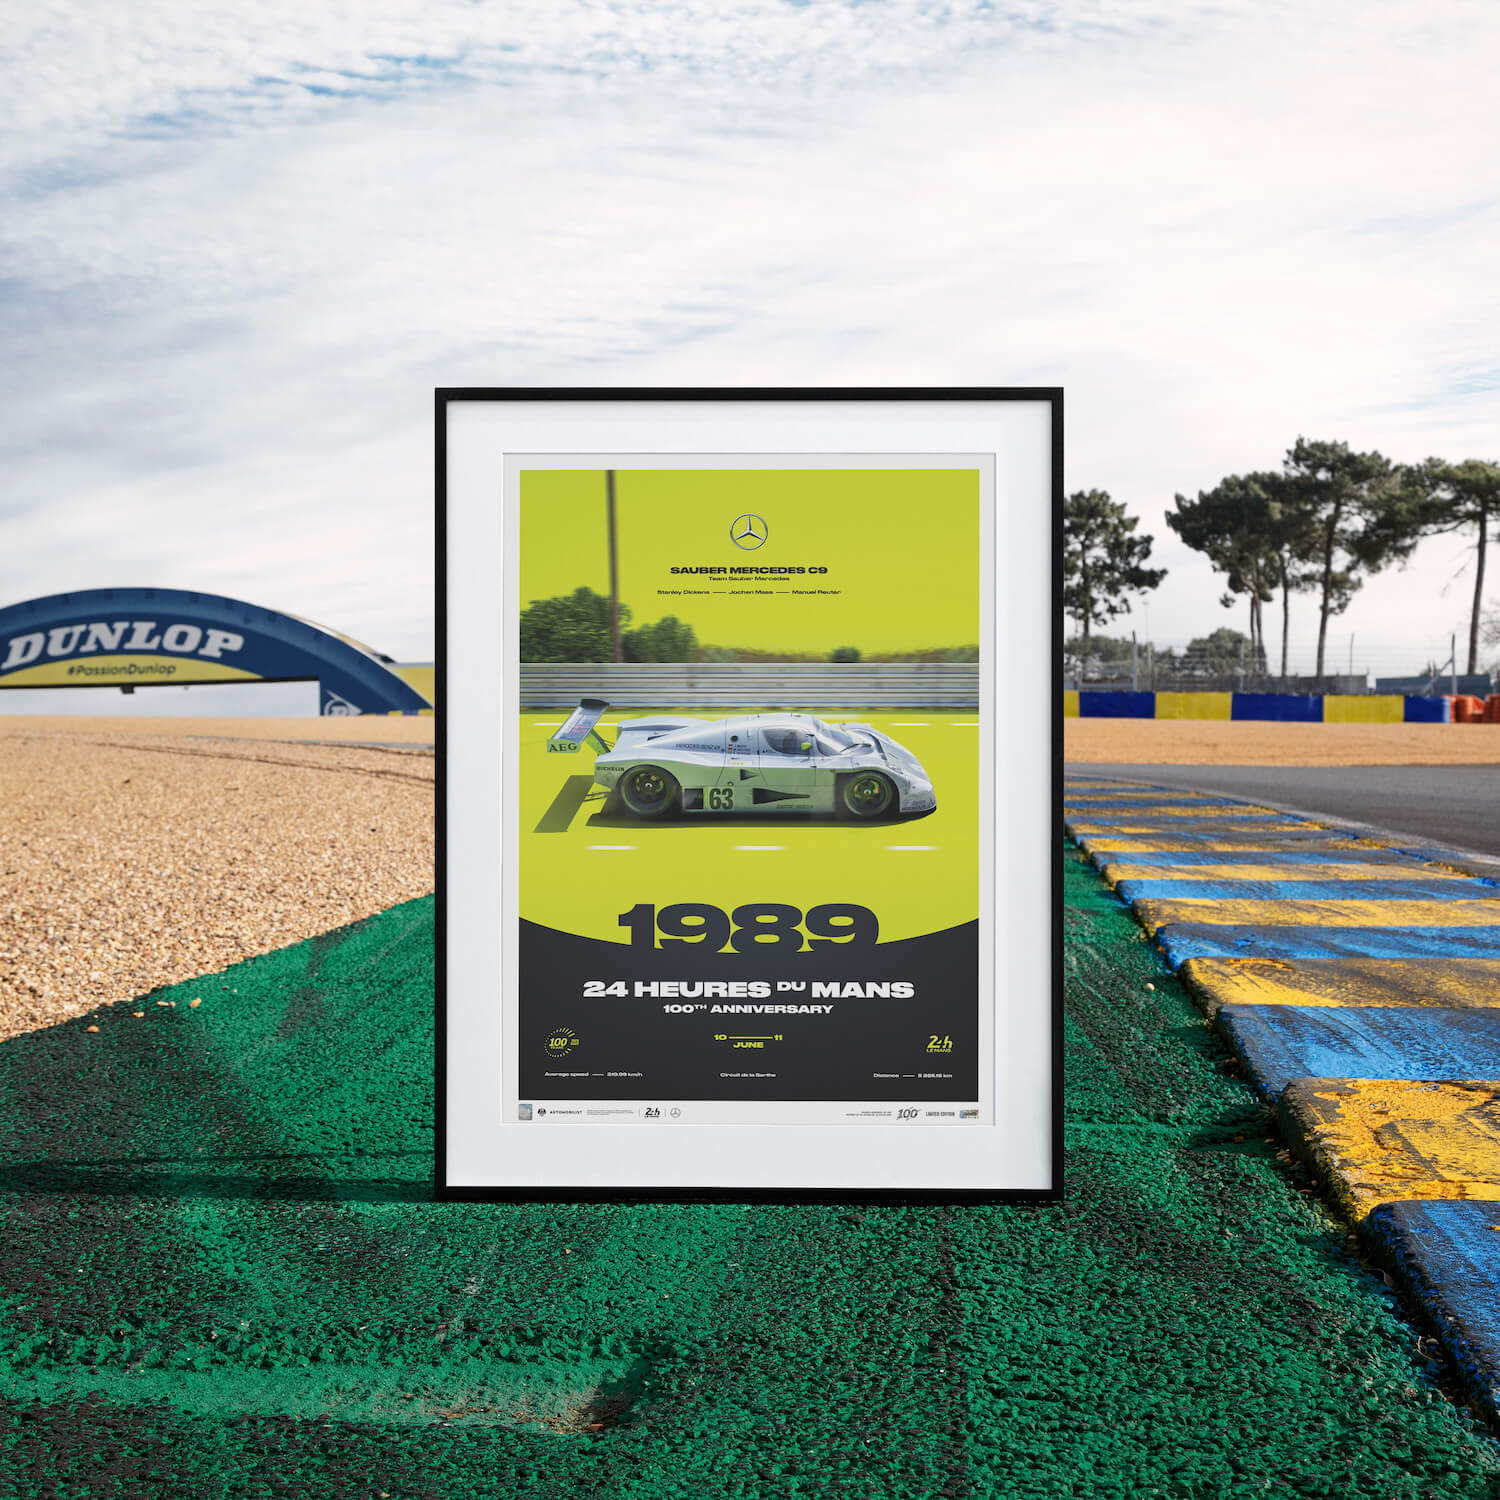 Sauber Mercedes C9 - 24h Le Mans - 100th Anniversary - 1989